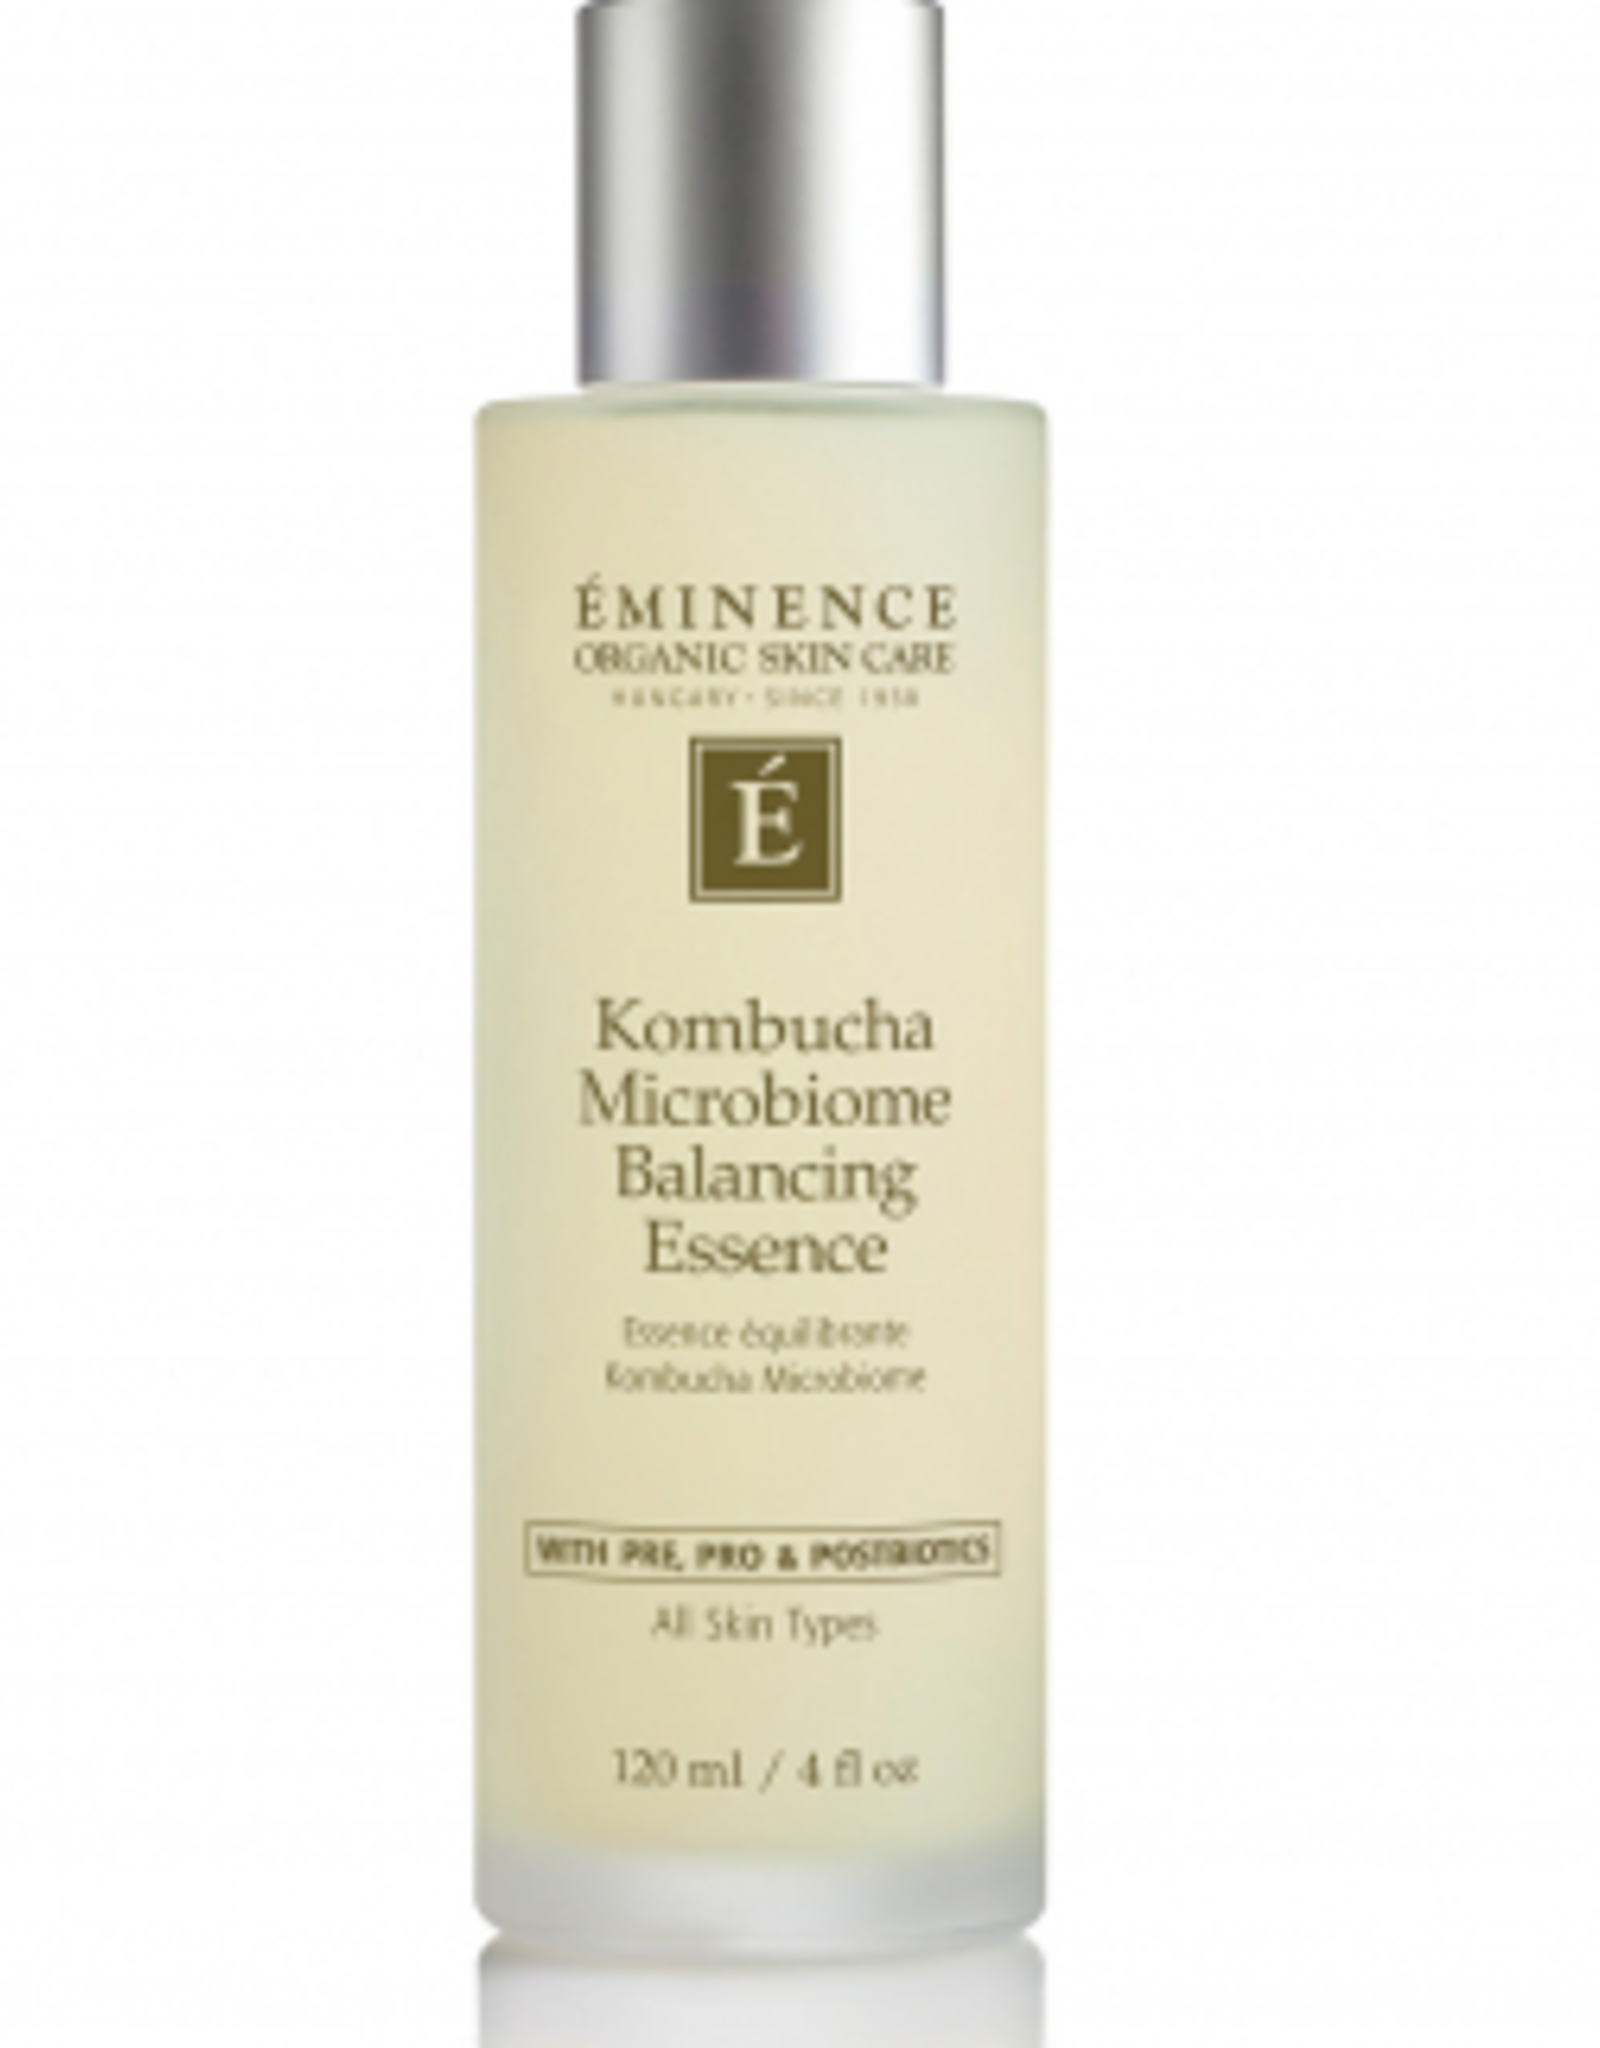 Eminence Organic Skin Care Kombucha Microbiome Balancing Essence